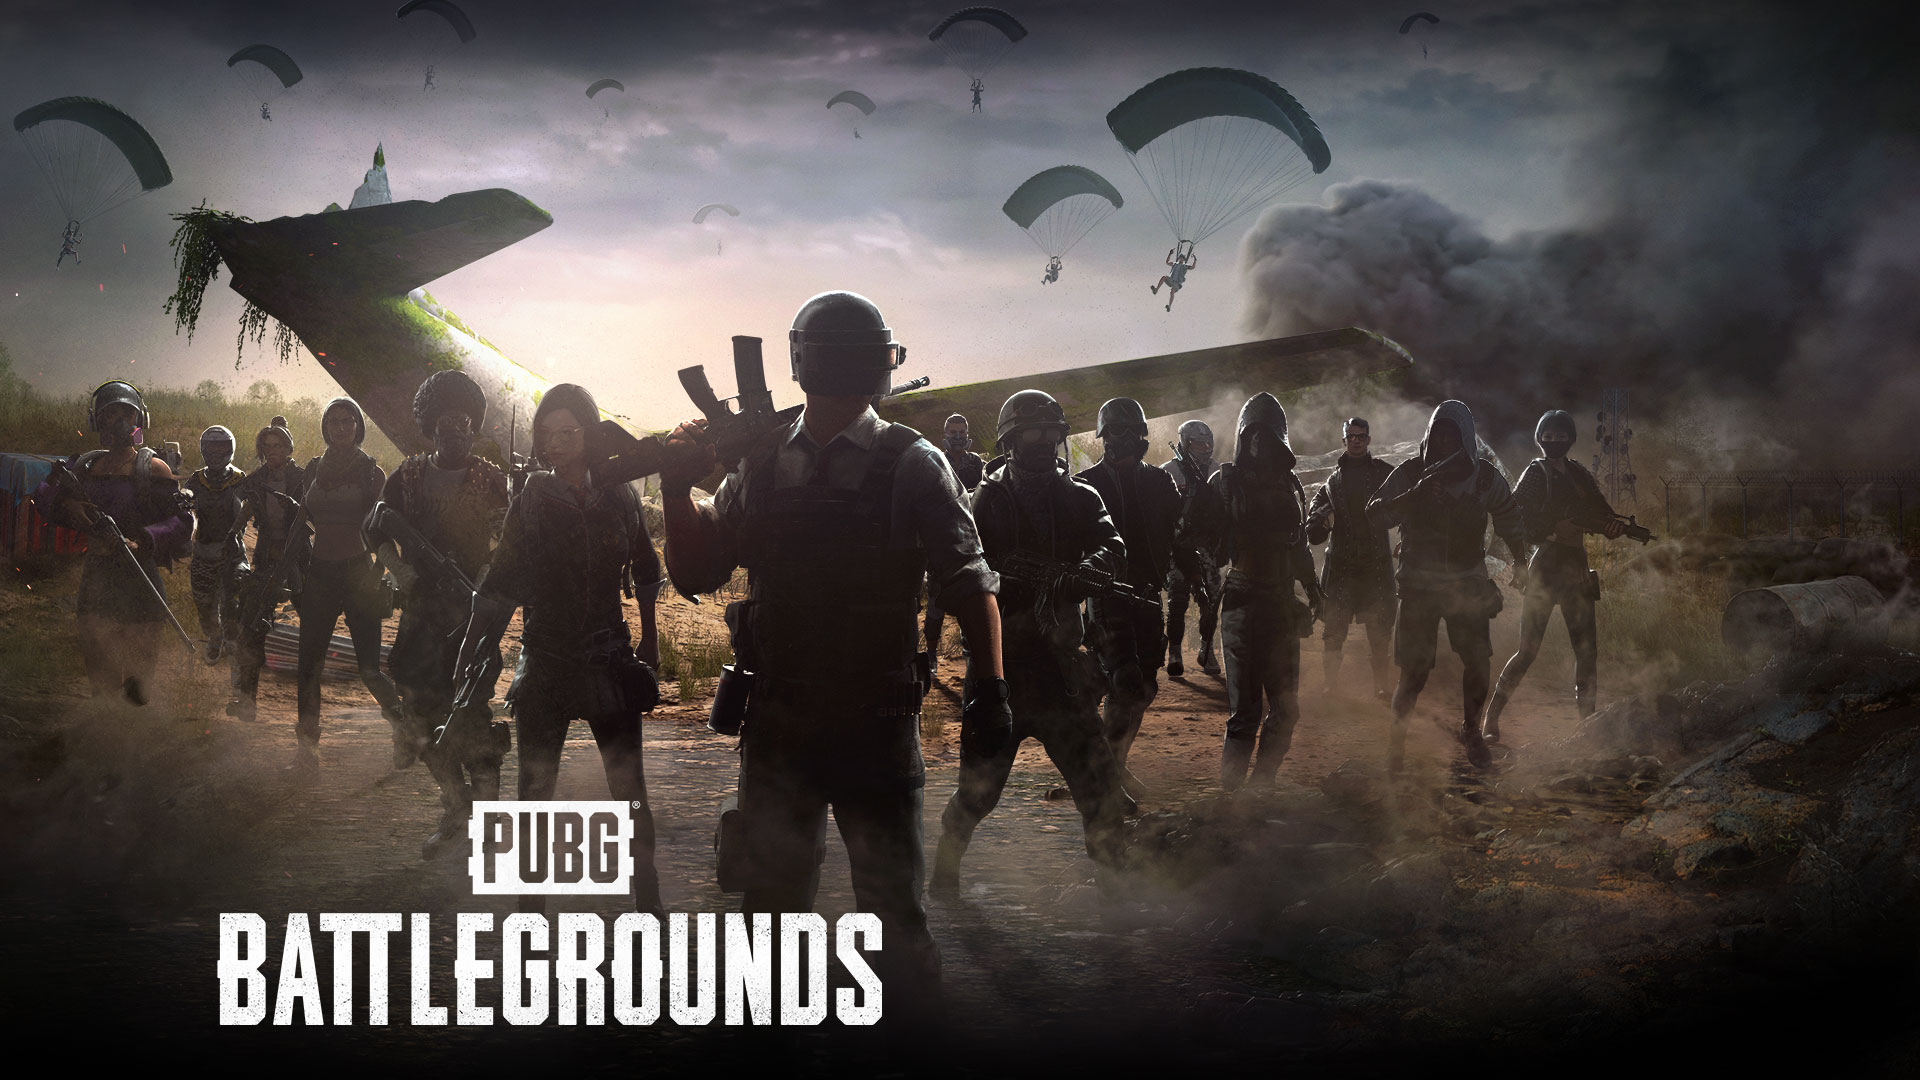 PUBG: Battlegrounds. Μια ομάδα παικτών μαζεύονται γύρω από τα συντρίμμια ενός αεροπλάνου ενώ άλλοι πέφτουν με αλεξίπτωτα.